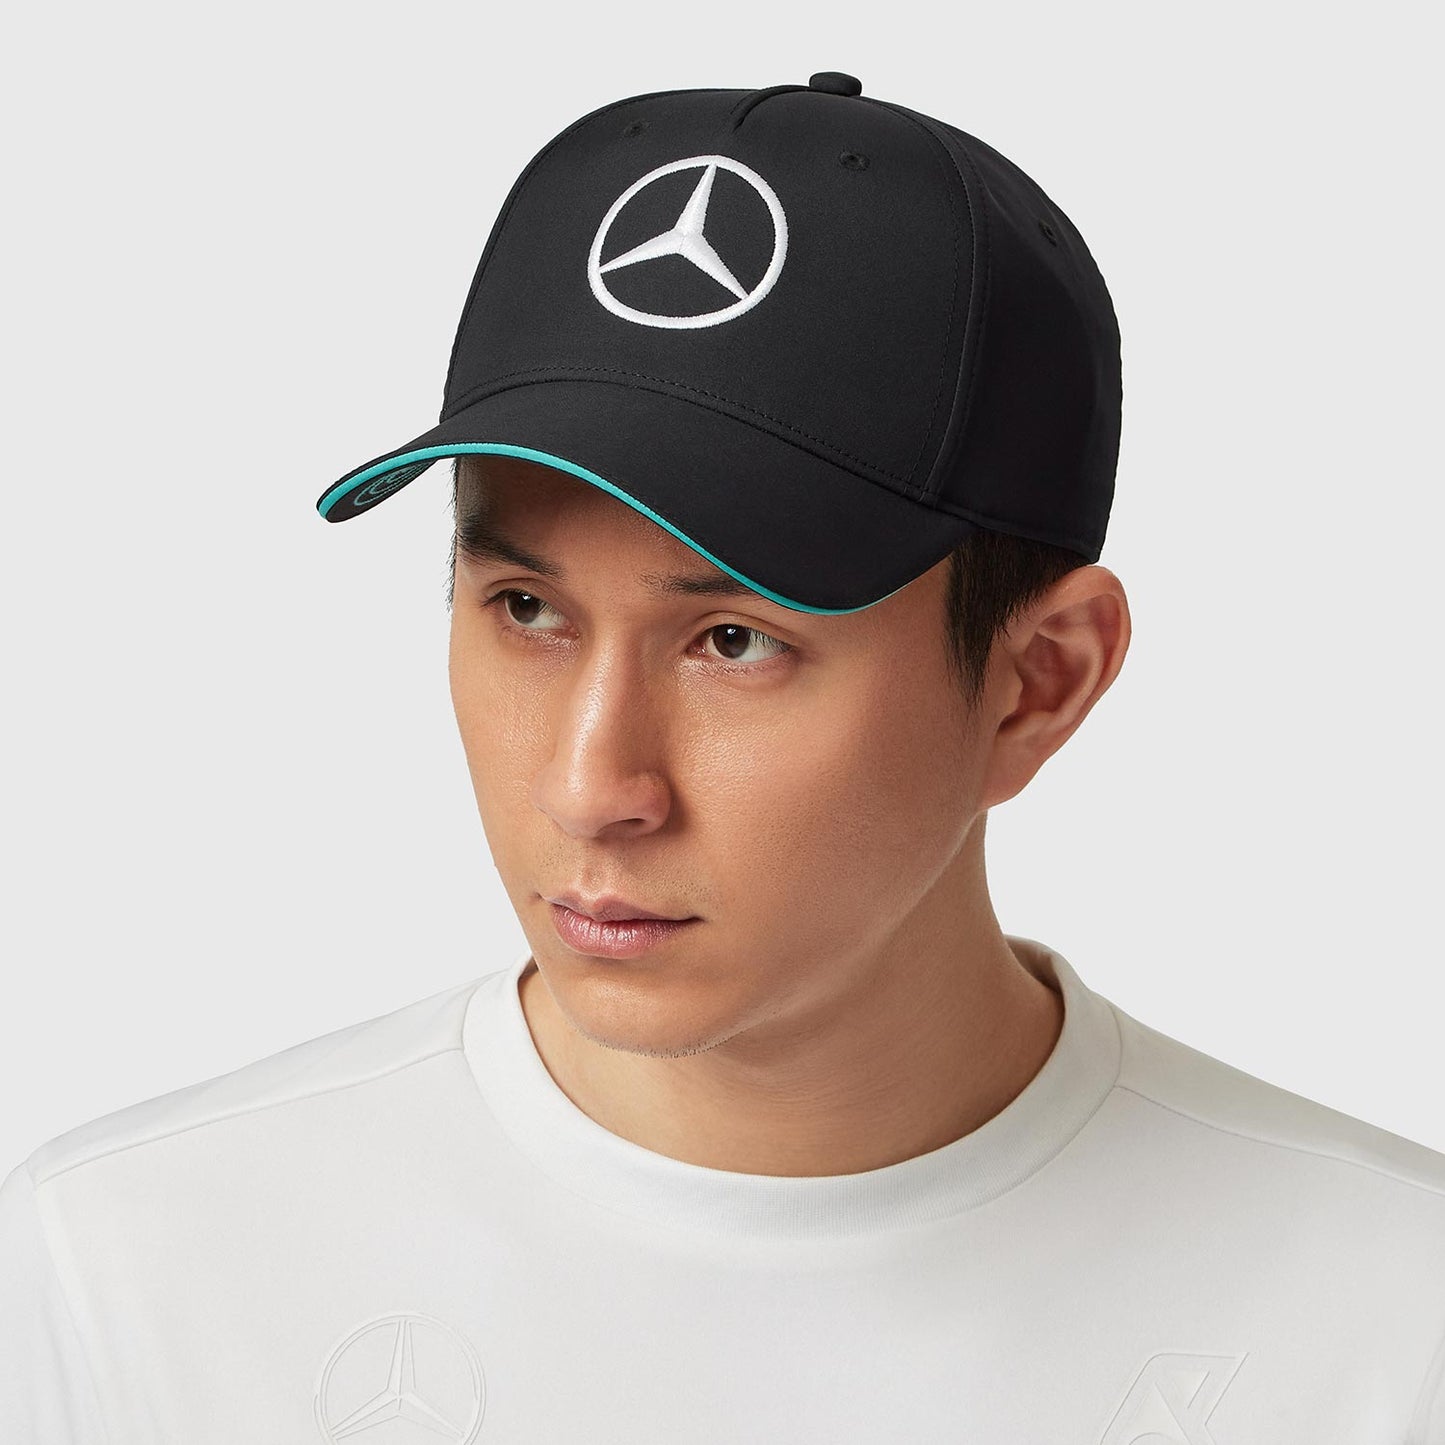 2023 Mercedes AMG Germany F1 Team Baseball Cap black